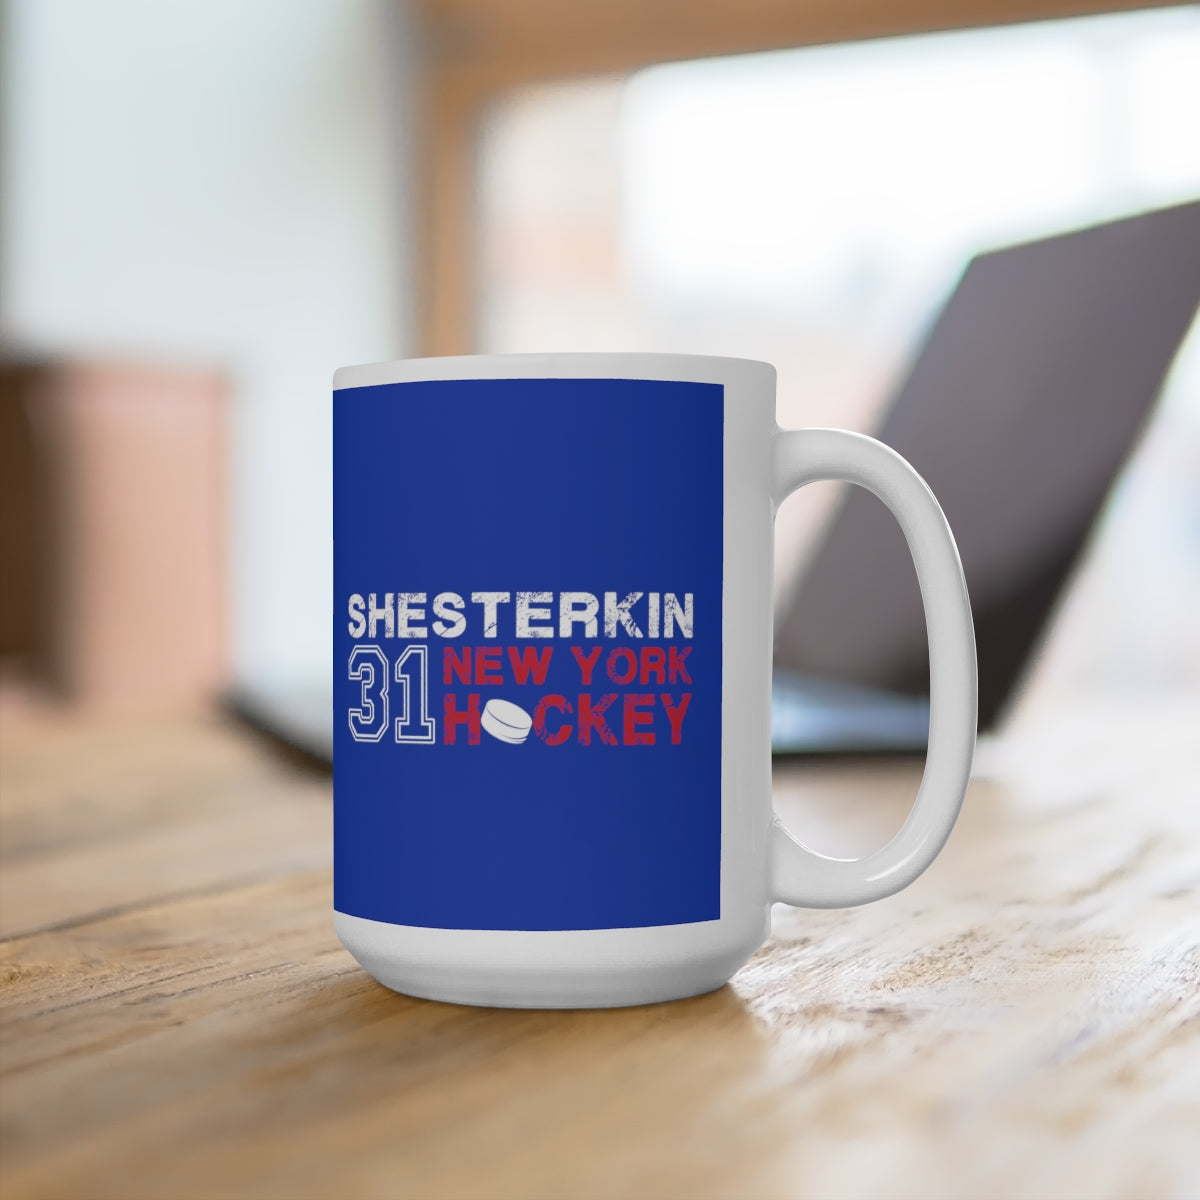 Shesterkin 31 New York Hockey Ceramic Coffee Mug In Blue, 15oz